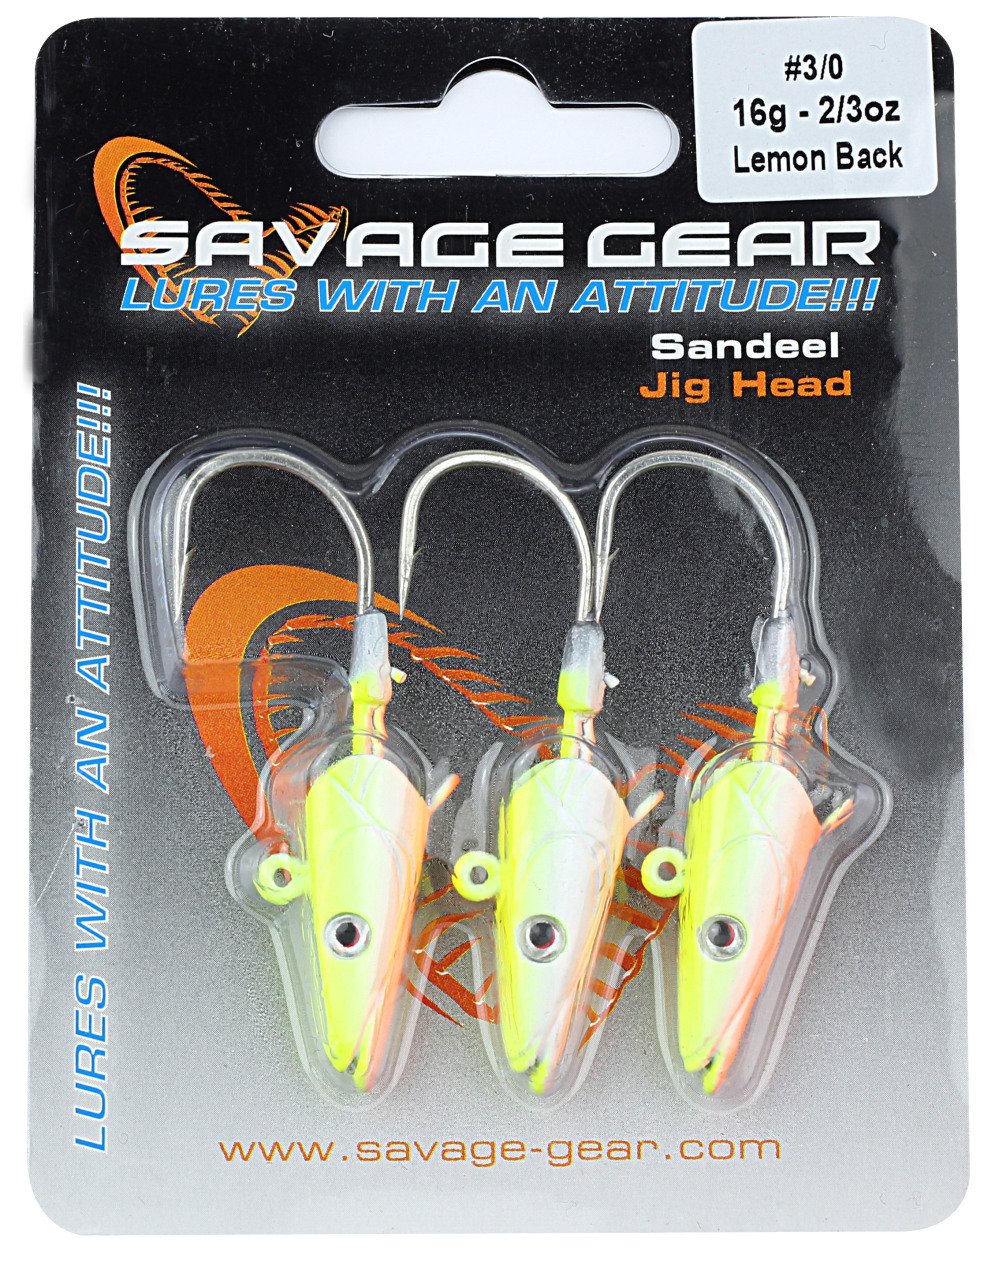 Savage gear Sandeel Jig Head 16g 3/0 - 3pcs Lemon Back Suni Yem